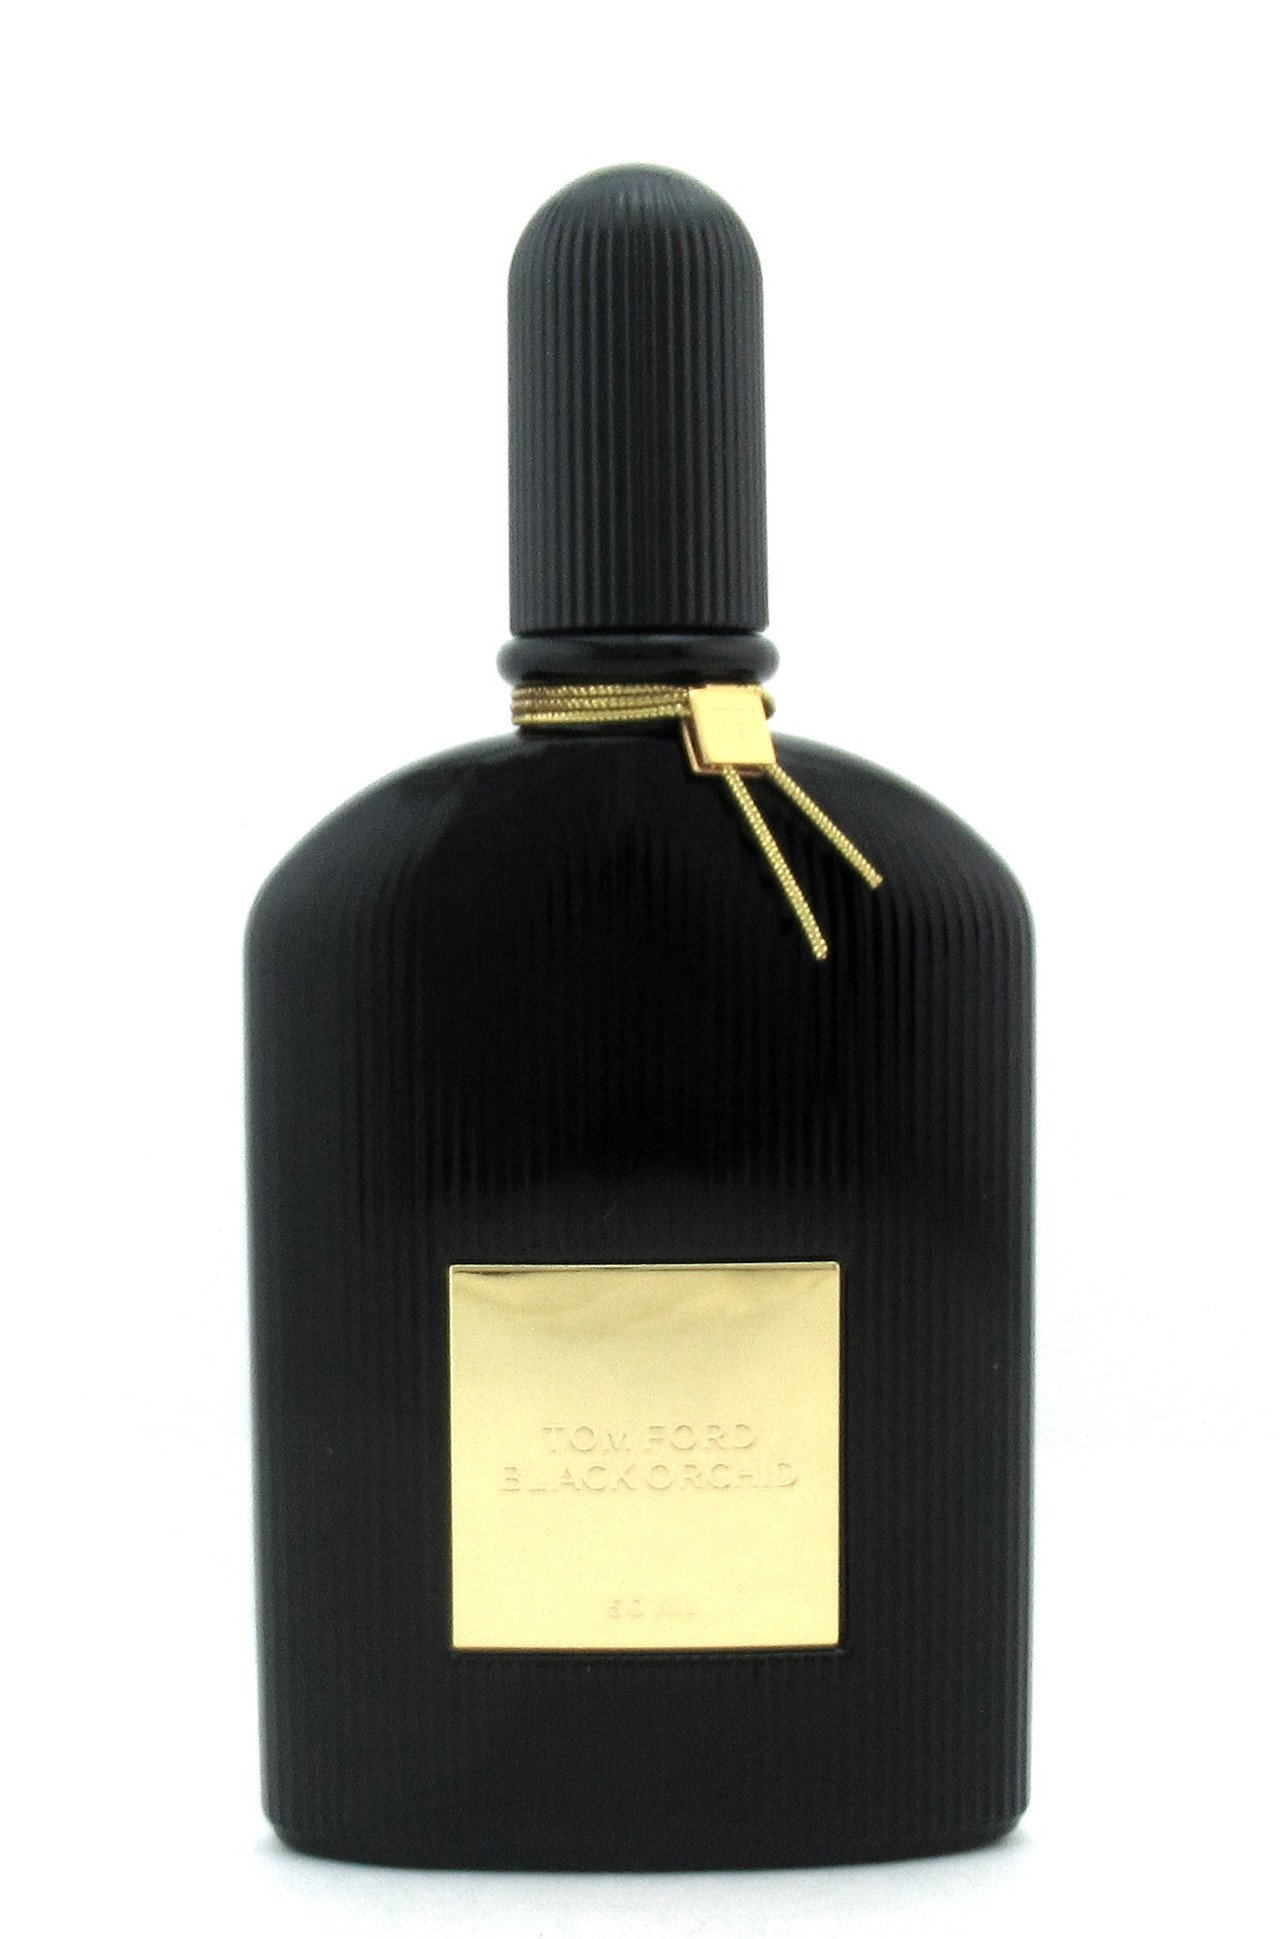 Tom Ford Black Orchid Eau De Parfum Spray for Women 1.7 oz./ 50 ml. New ...